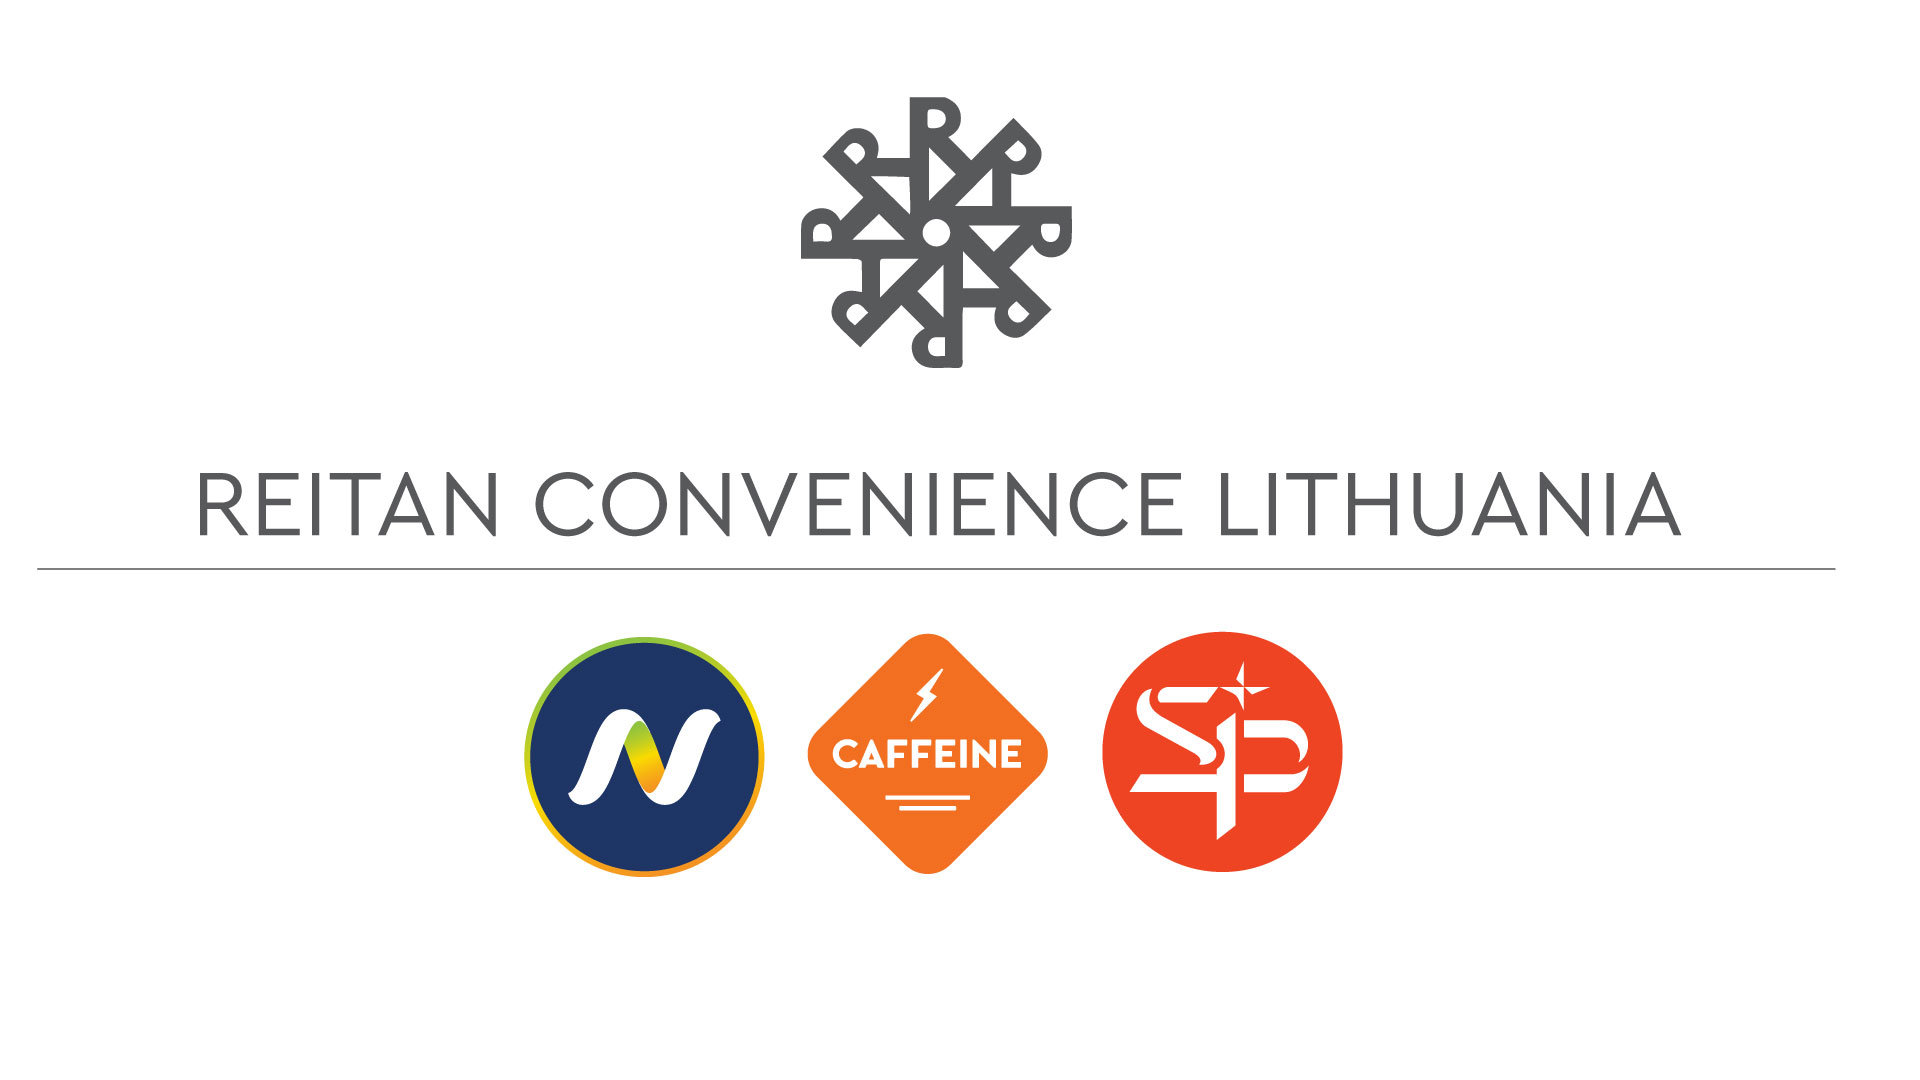 REITAN CONVENIENCE LITUANIA